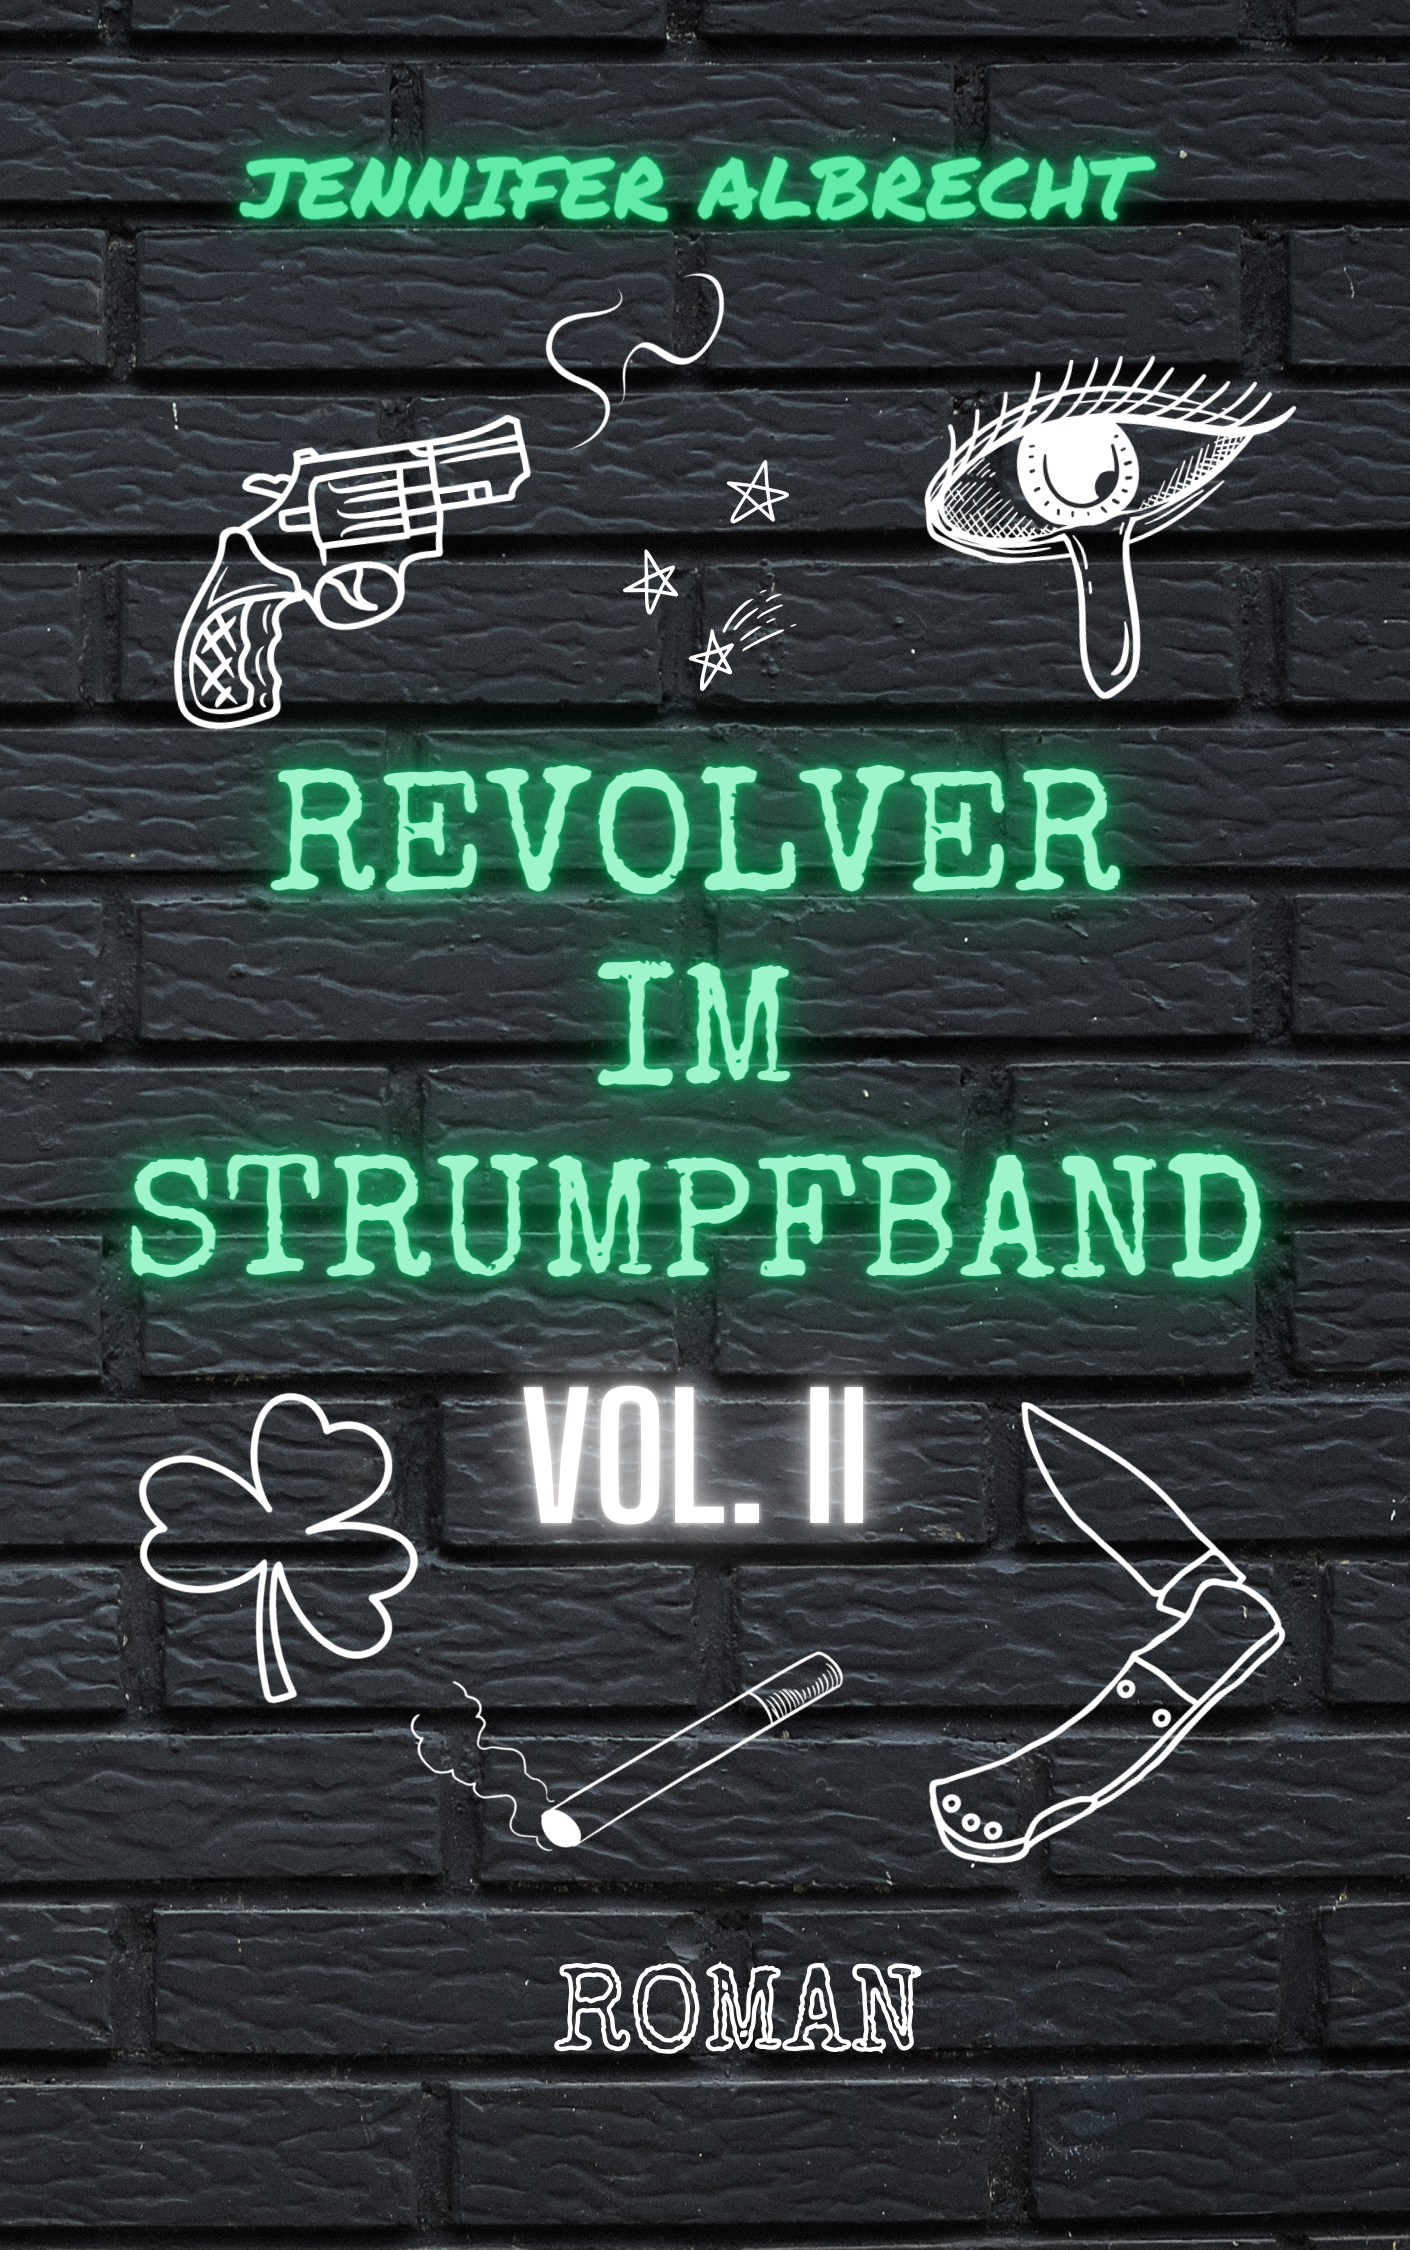 Revolver im Strumpfband Vol. II